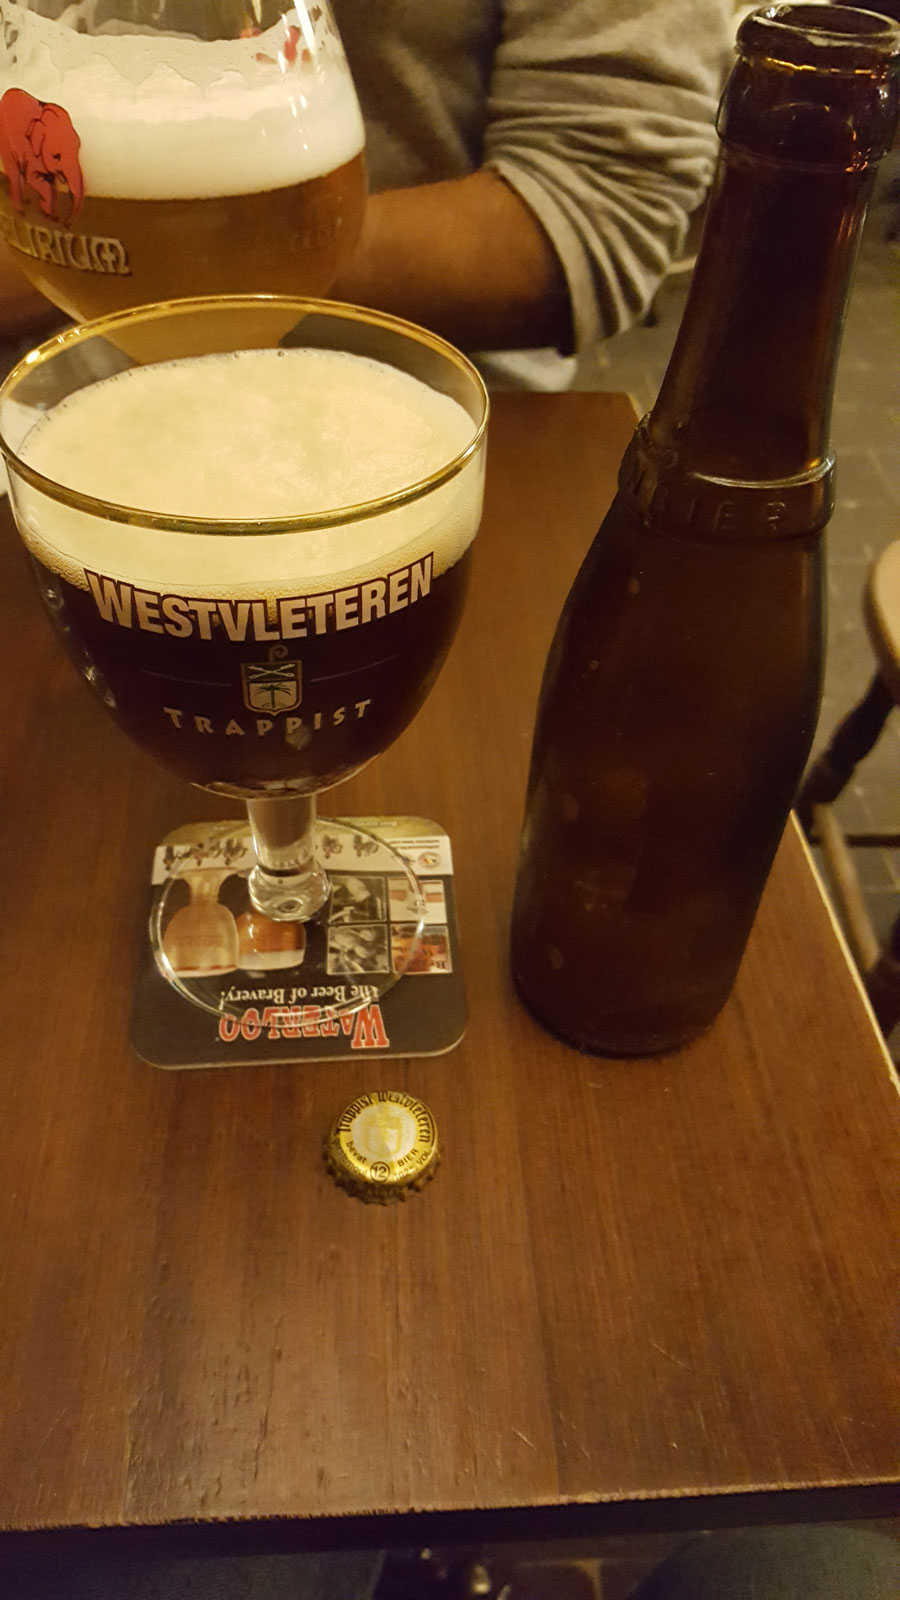 A Westvleteren Beer at De Dulle Griet